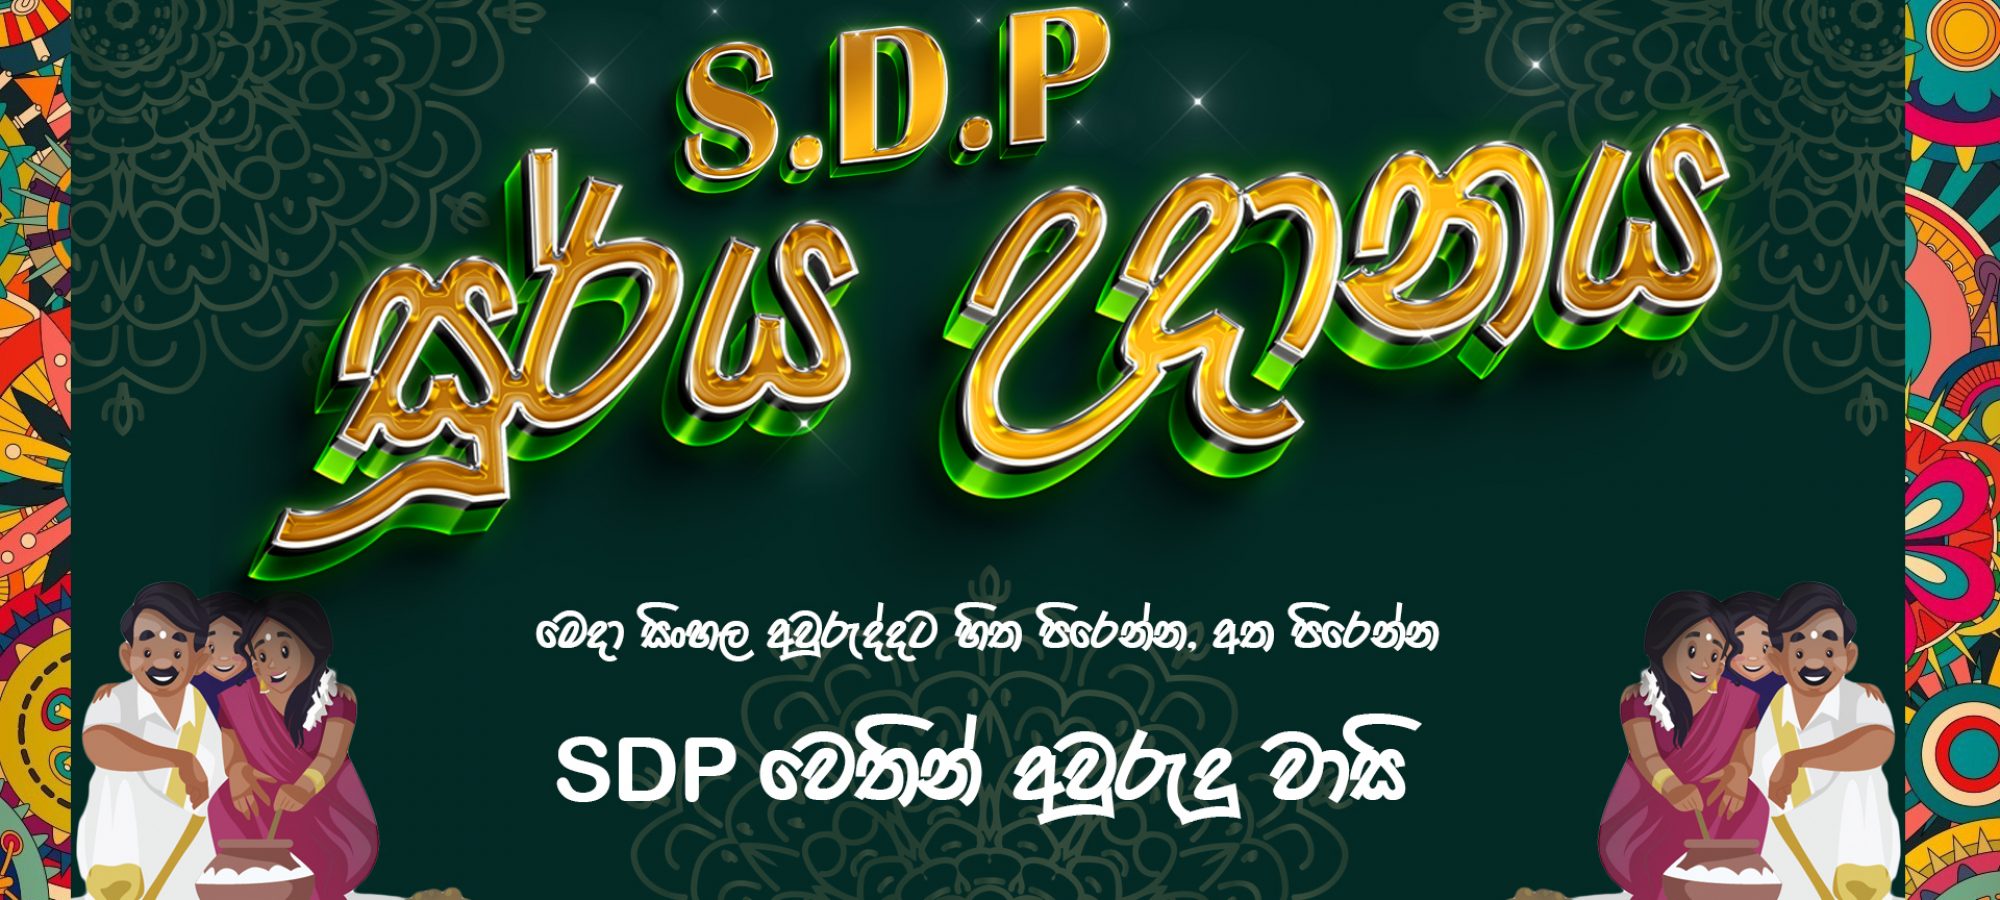 SDP NEW YEAR